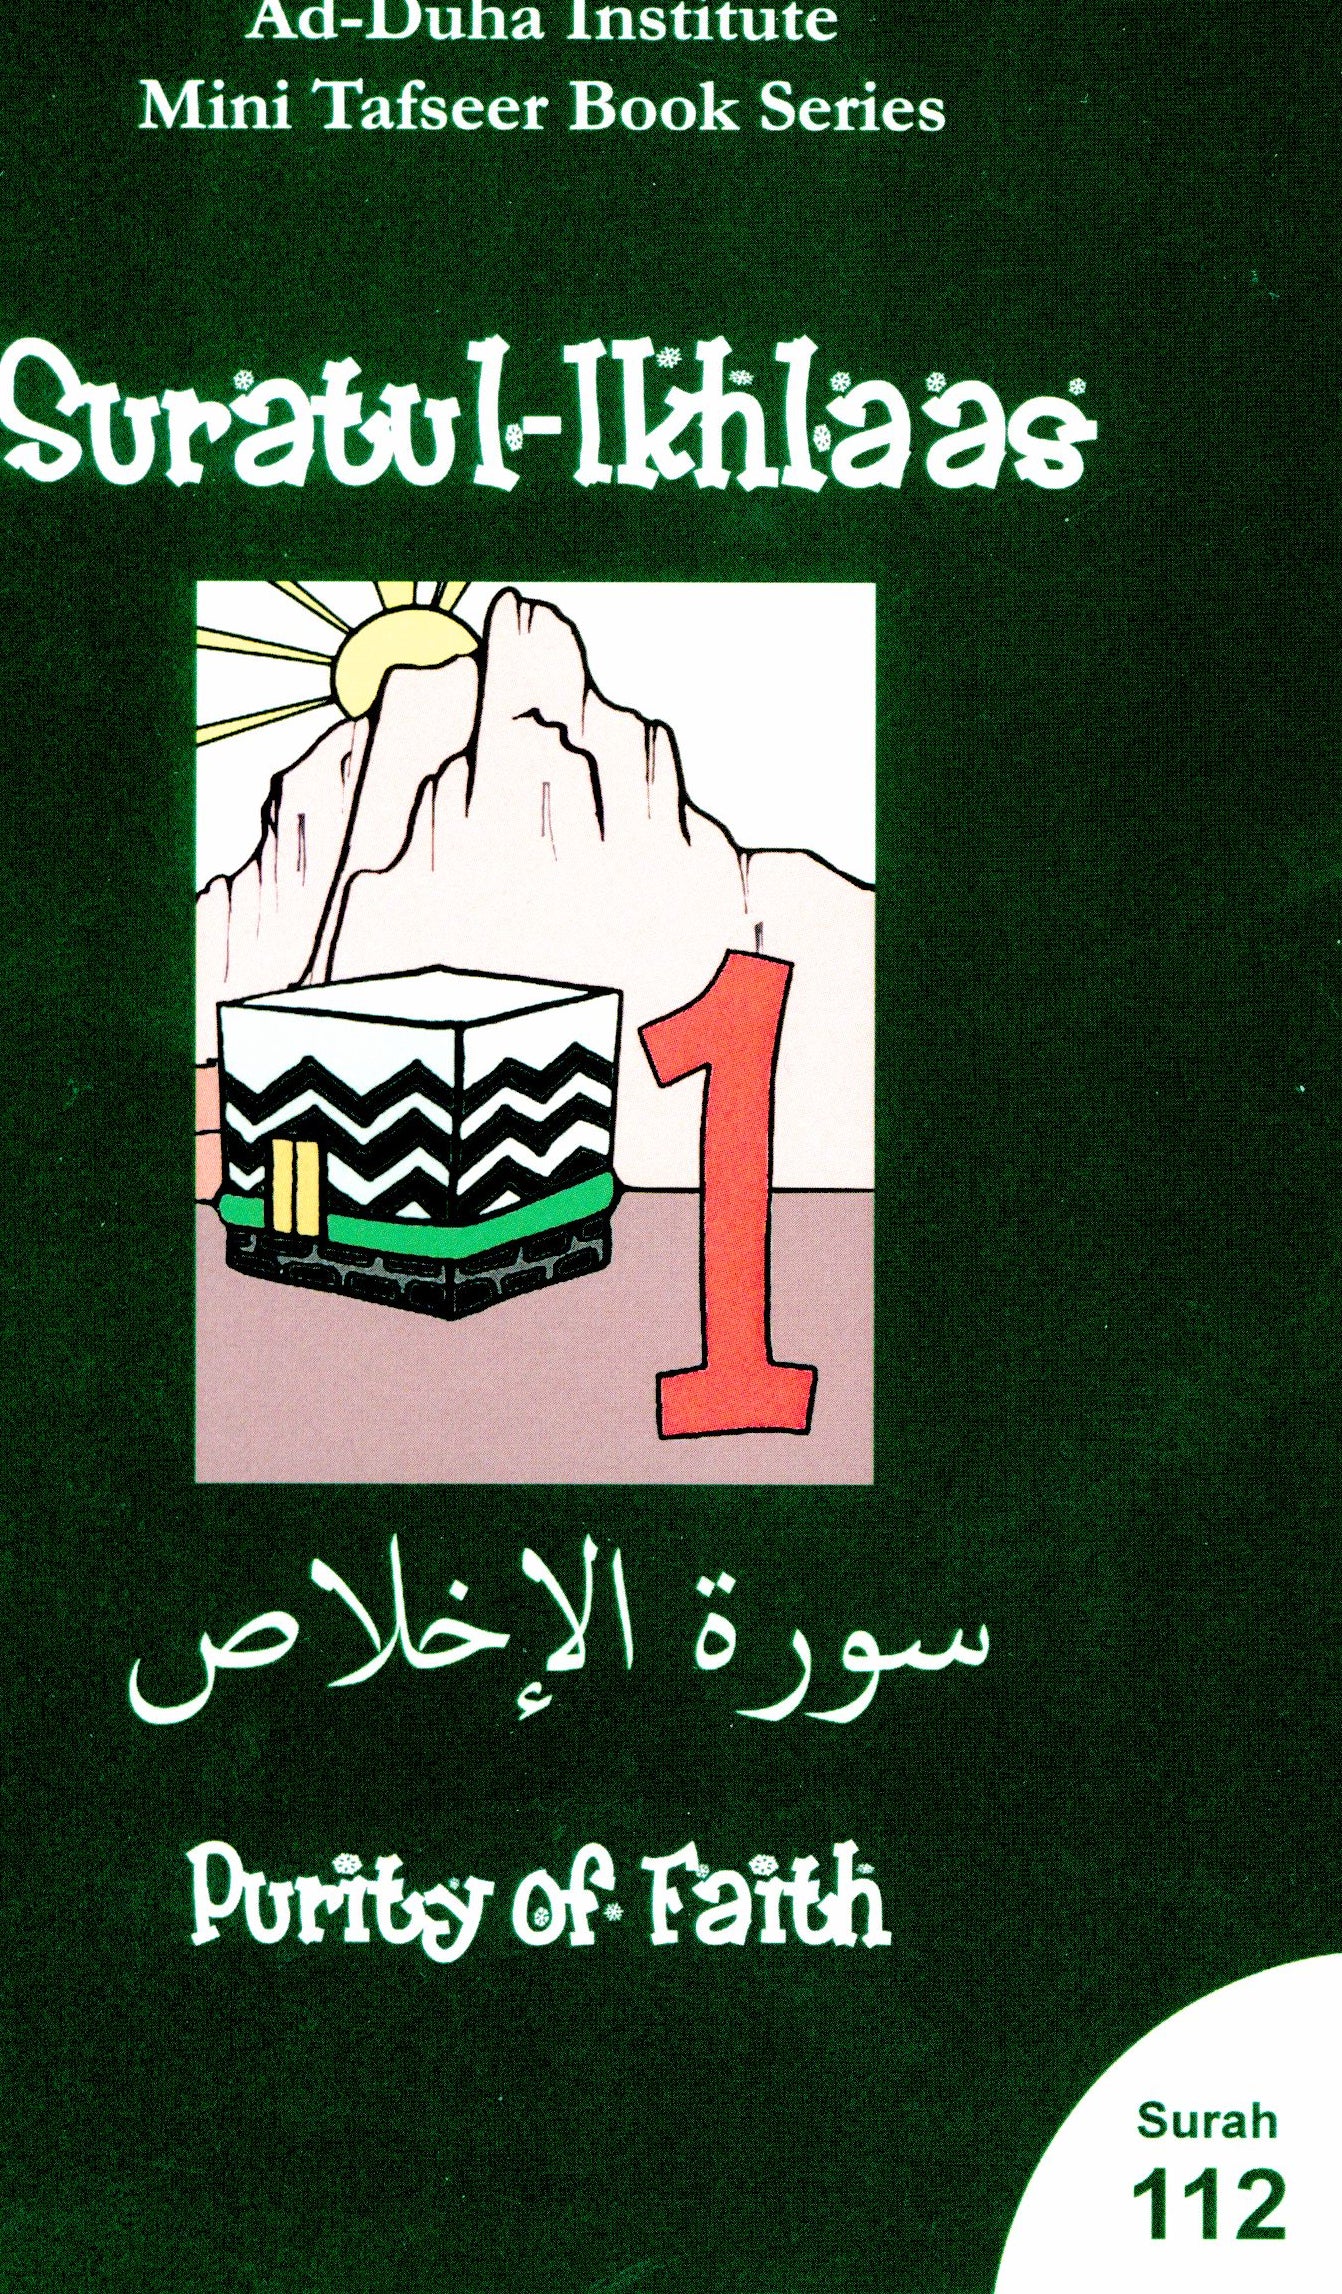 Mini Tafseer Book Suratul Ikhlaas (Surah 112)